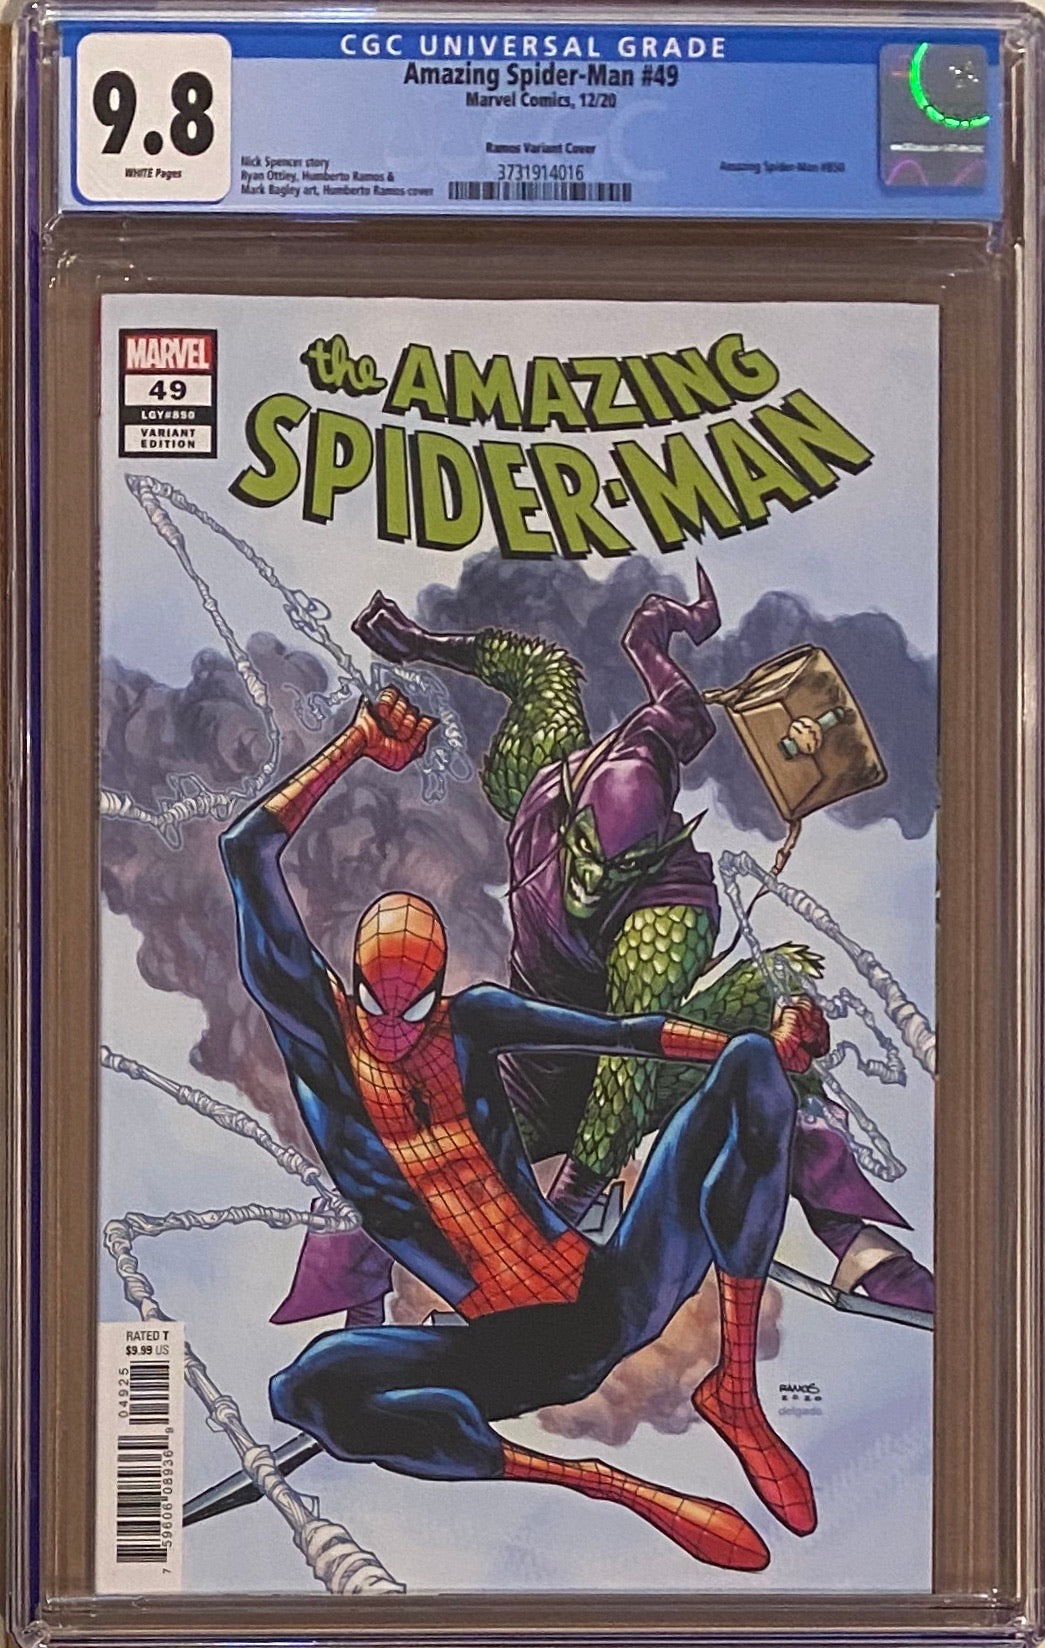 Amazing Spider-Man #850 (#49) Ramos Variant CGC 9.8